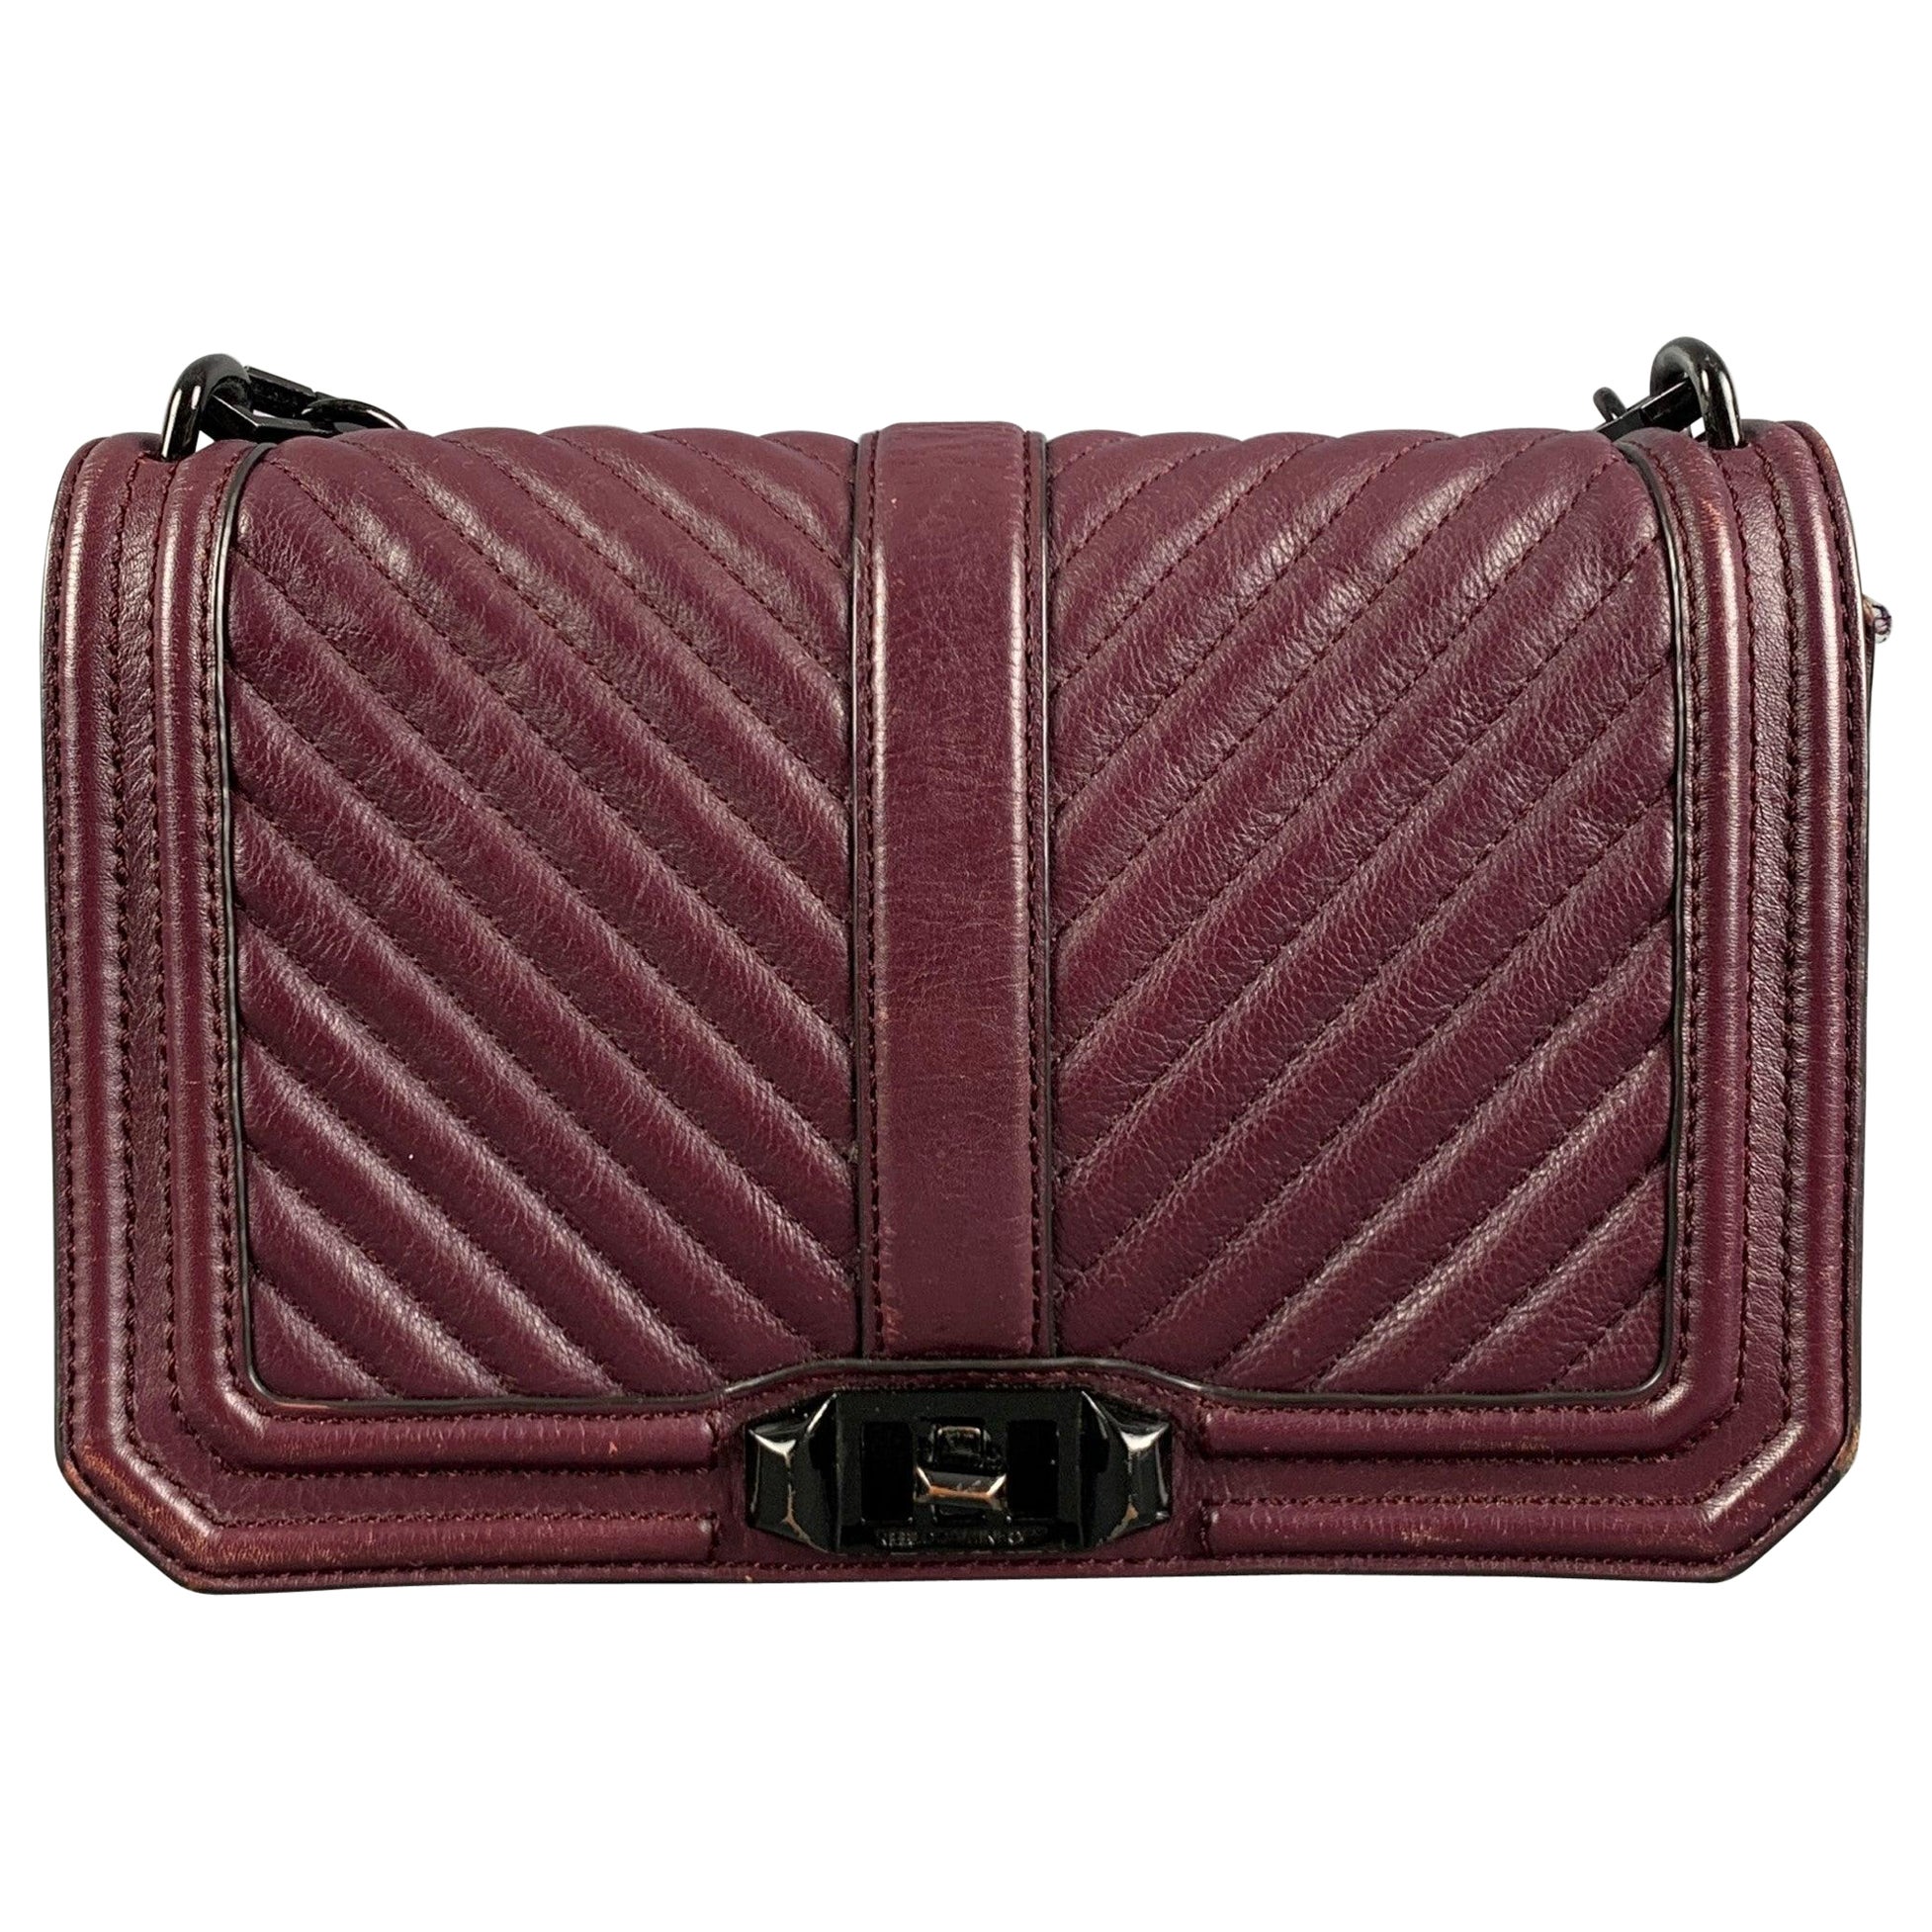 REBECCA MINKOFF Burgundy Quilted Chevron Leather Handbag For Sale